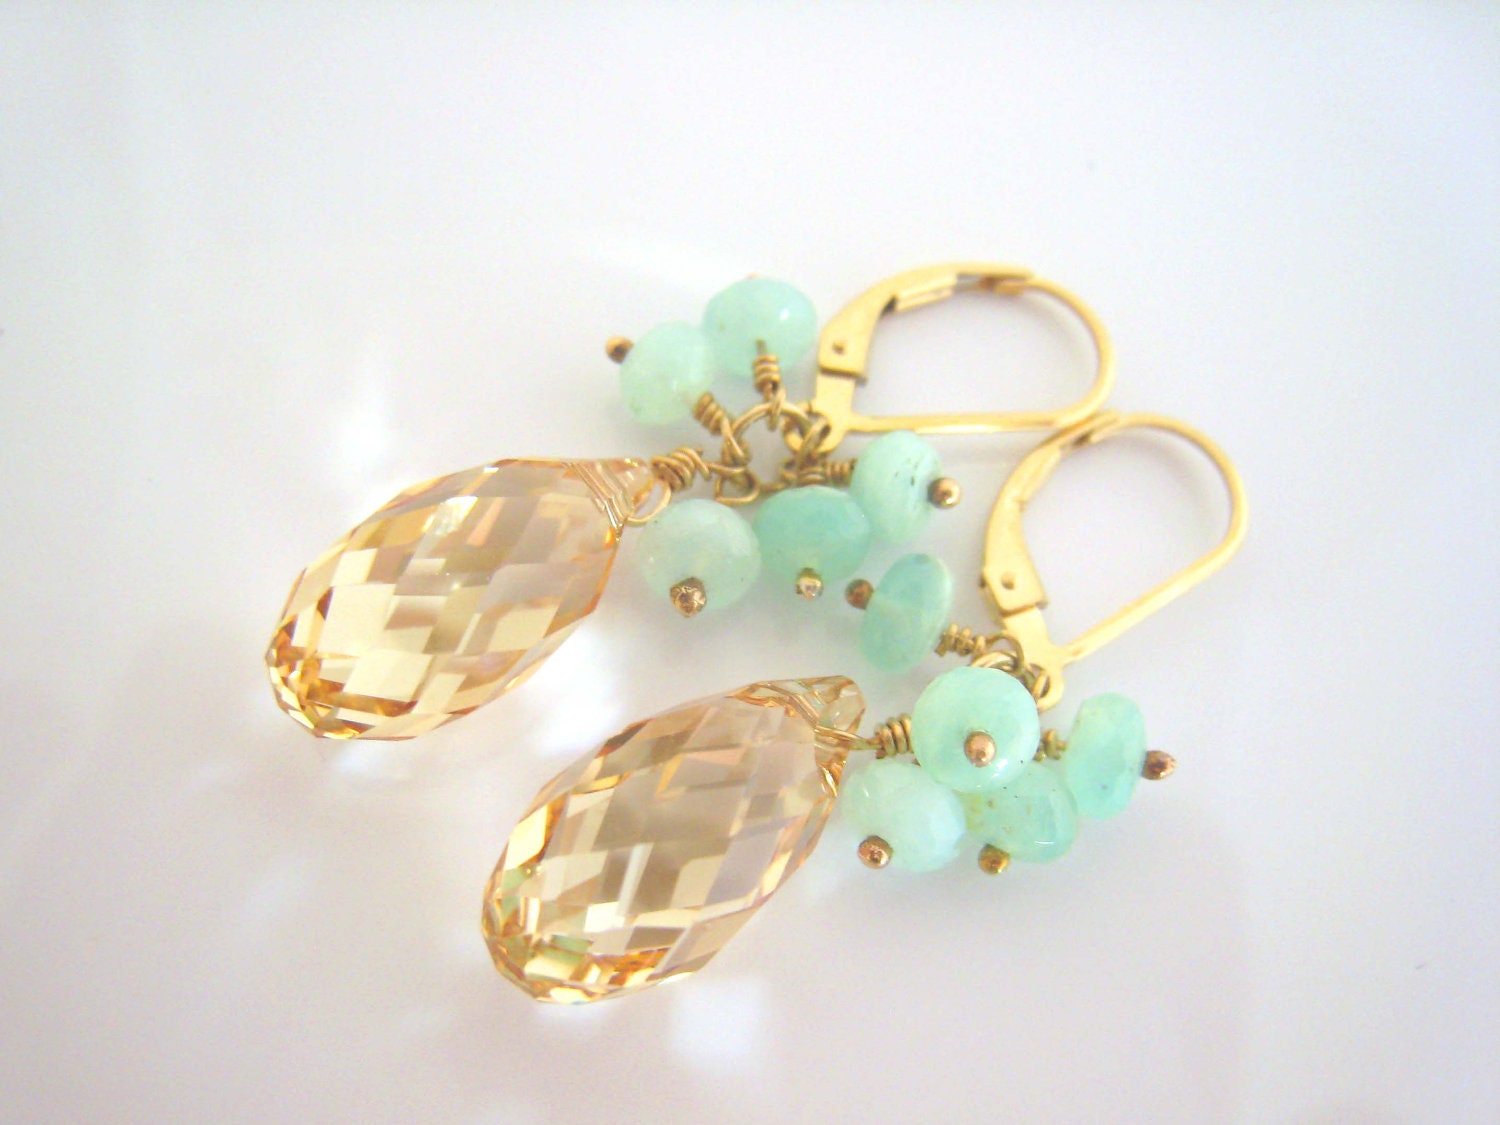 Swarovski Crystal Earrings Peruvian Opal 14k gold filled Gift for Her - SiennaGraceJewelry